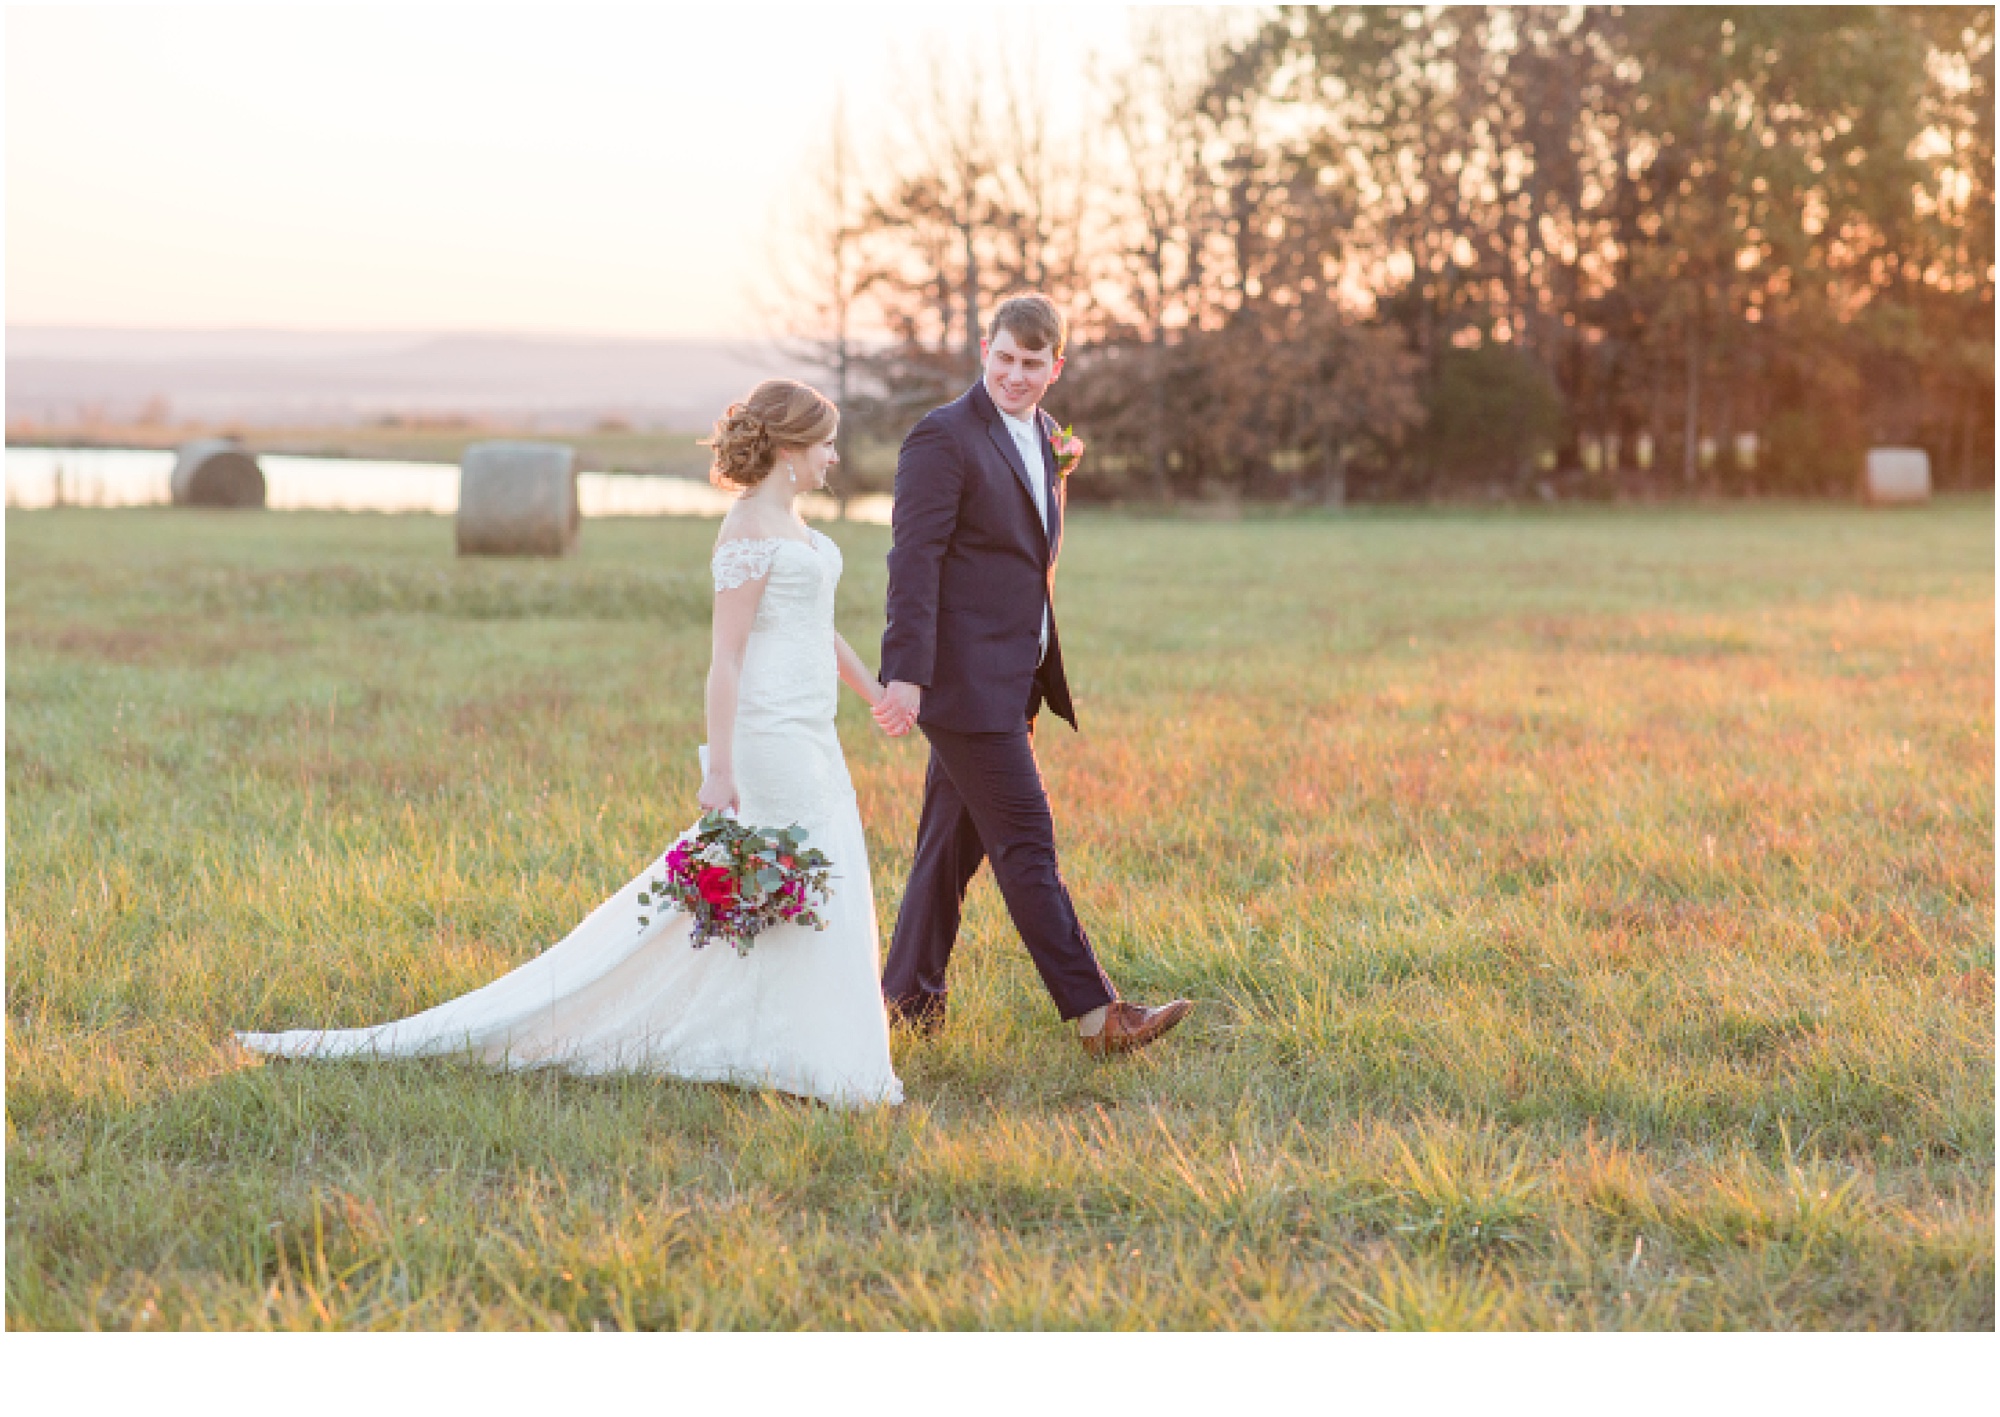 bride and groom white dress, navy blue suit walking in field, wedding flowers in hand